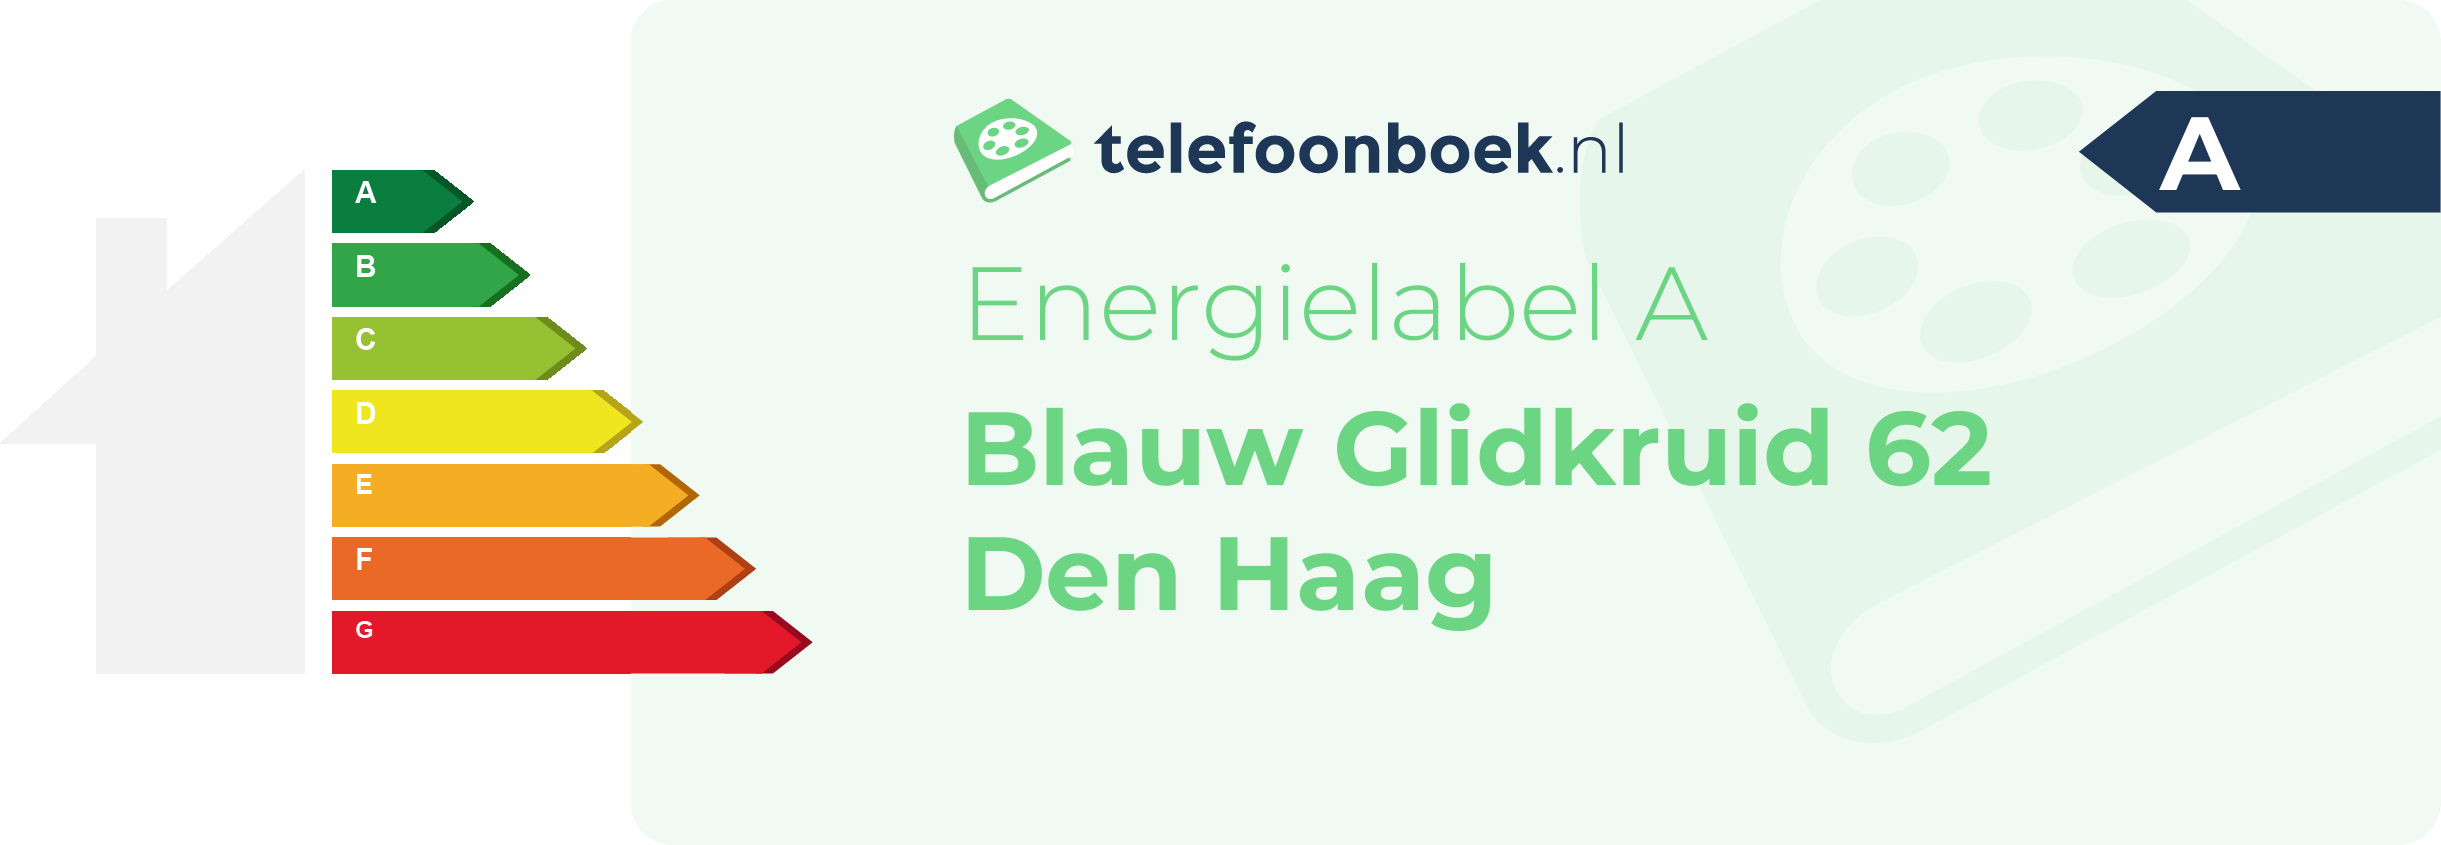 Energielabel Blauw Glidkruid 62 Den Haag